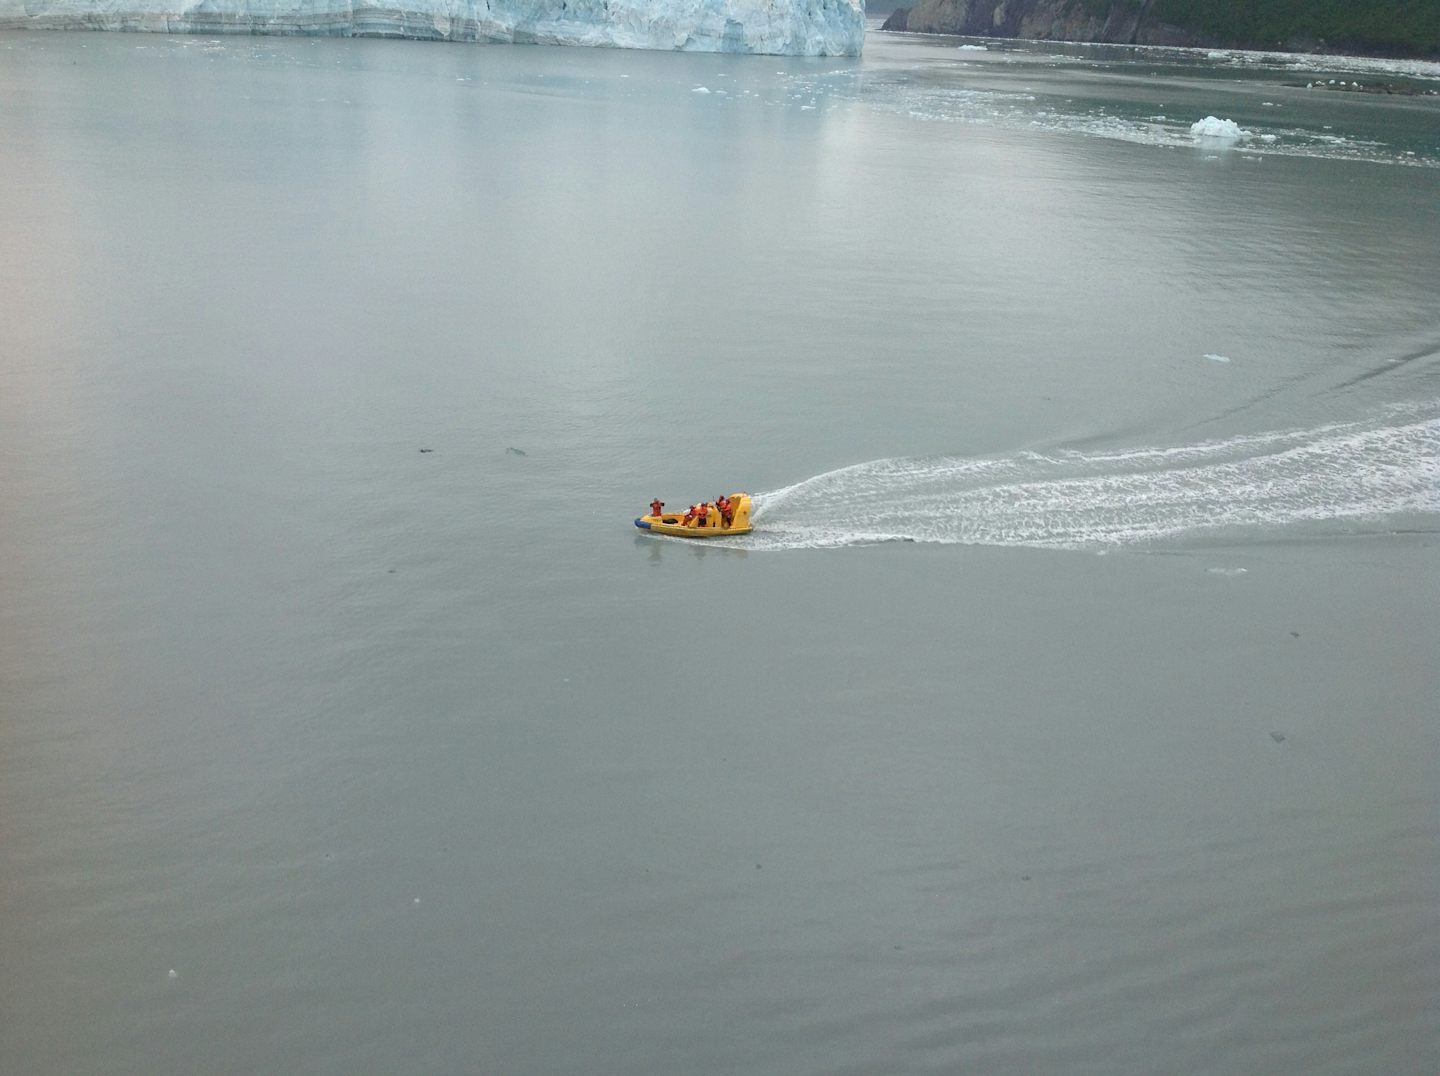 Ships boat taking photos of glacier